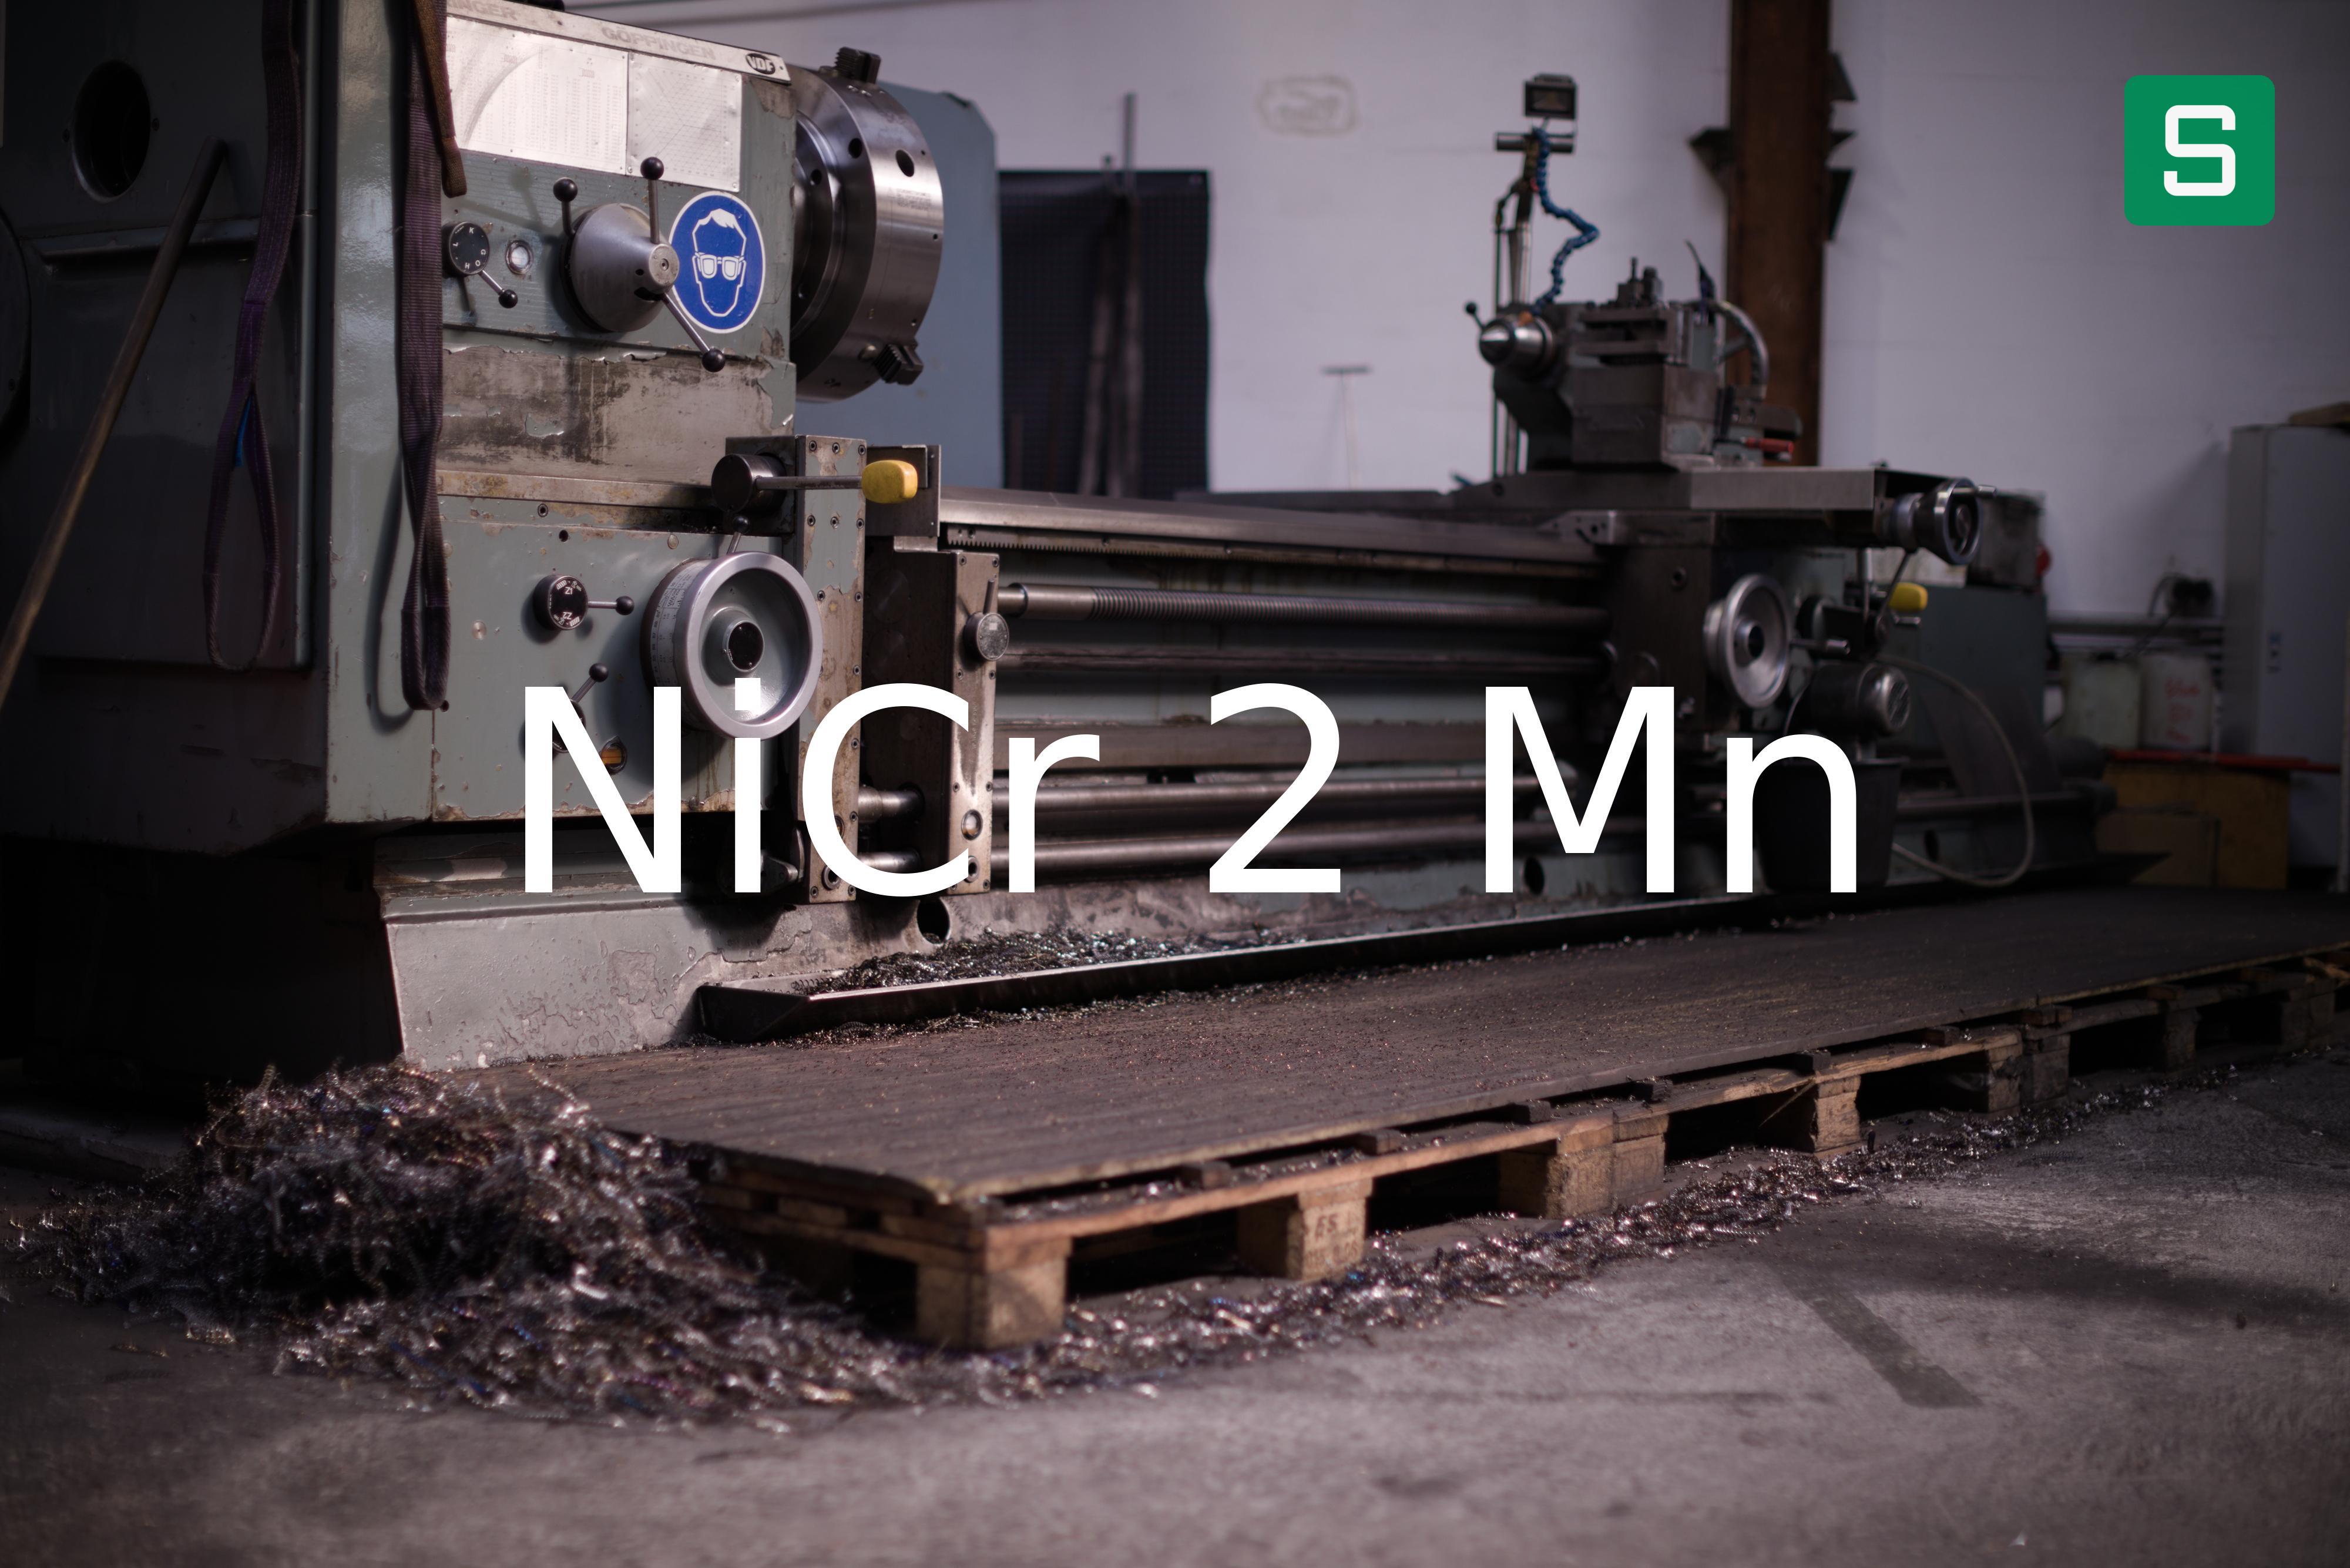 Steel Material: NiCr 2 Mn